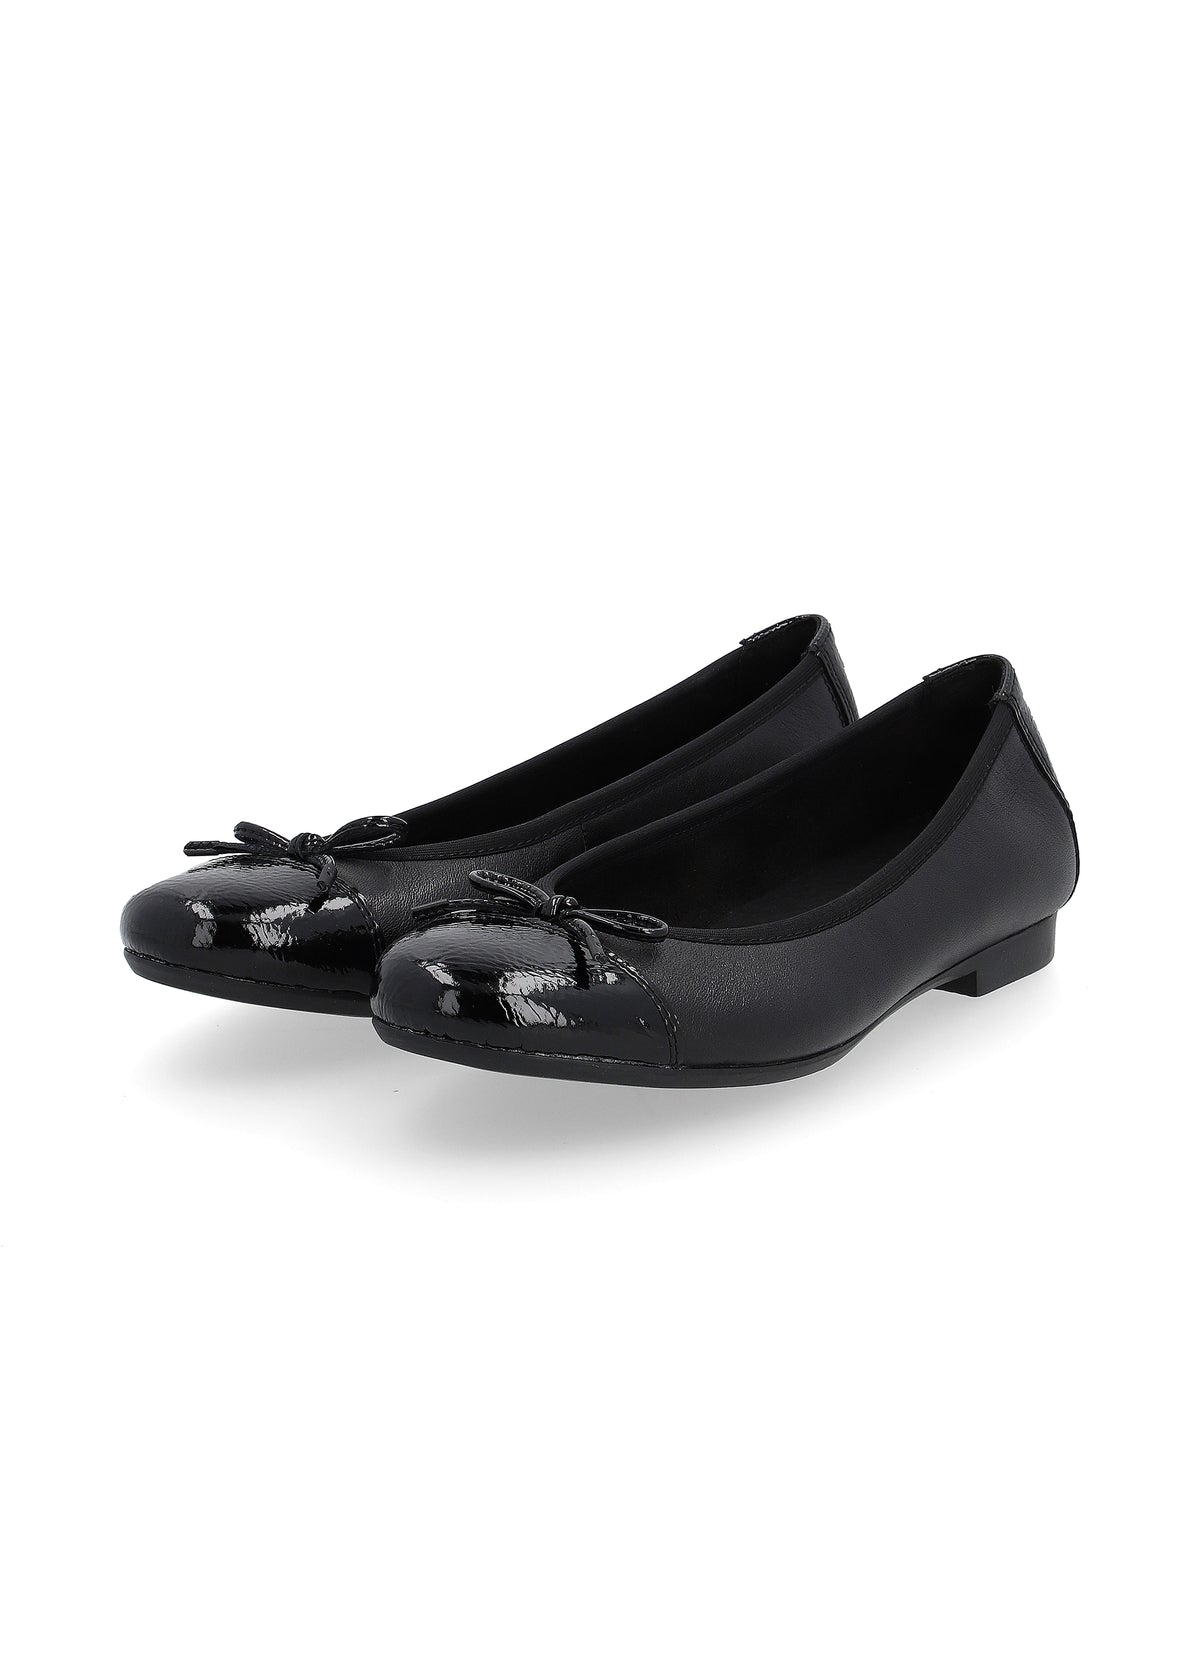 Ballerina shoes - black, bow decoration